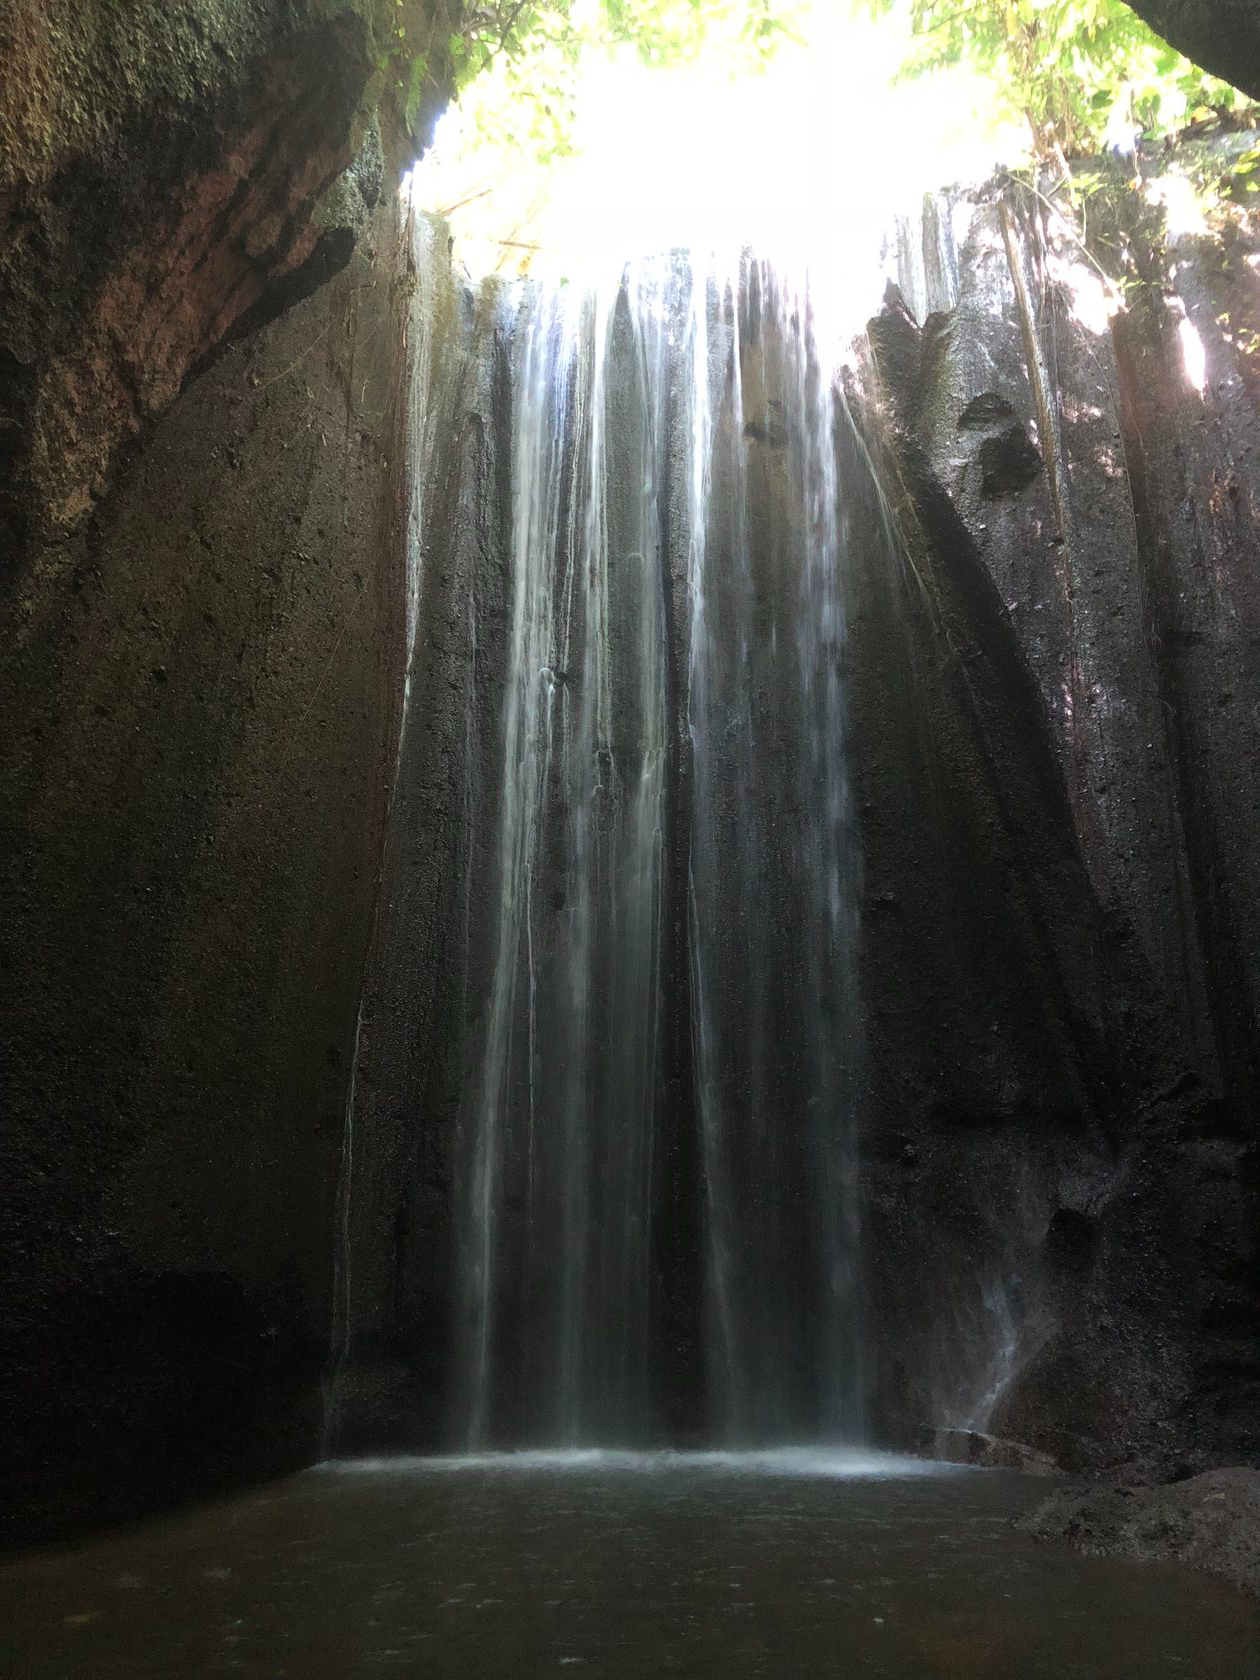 Tukad cepung waterfall in bali guide - wanderers & warriors